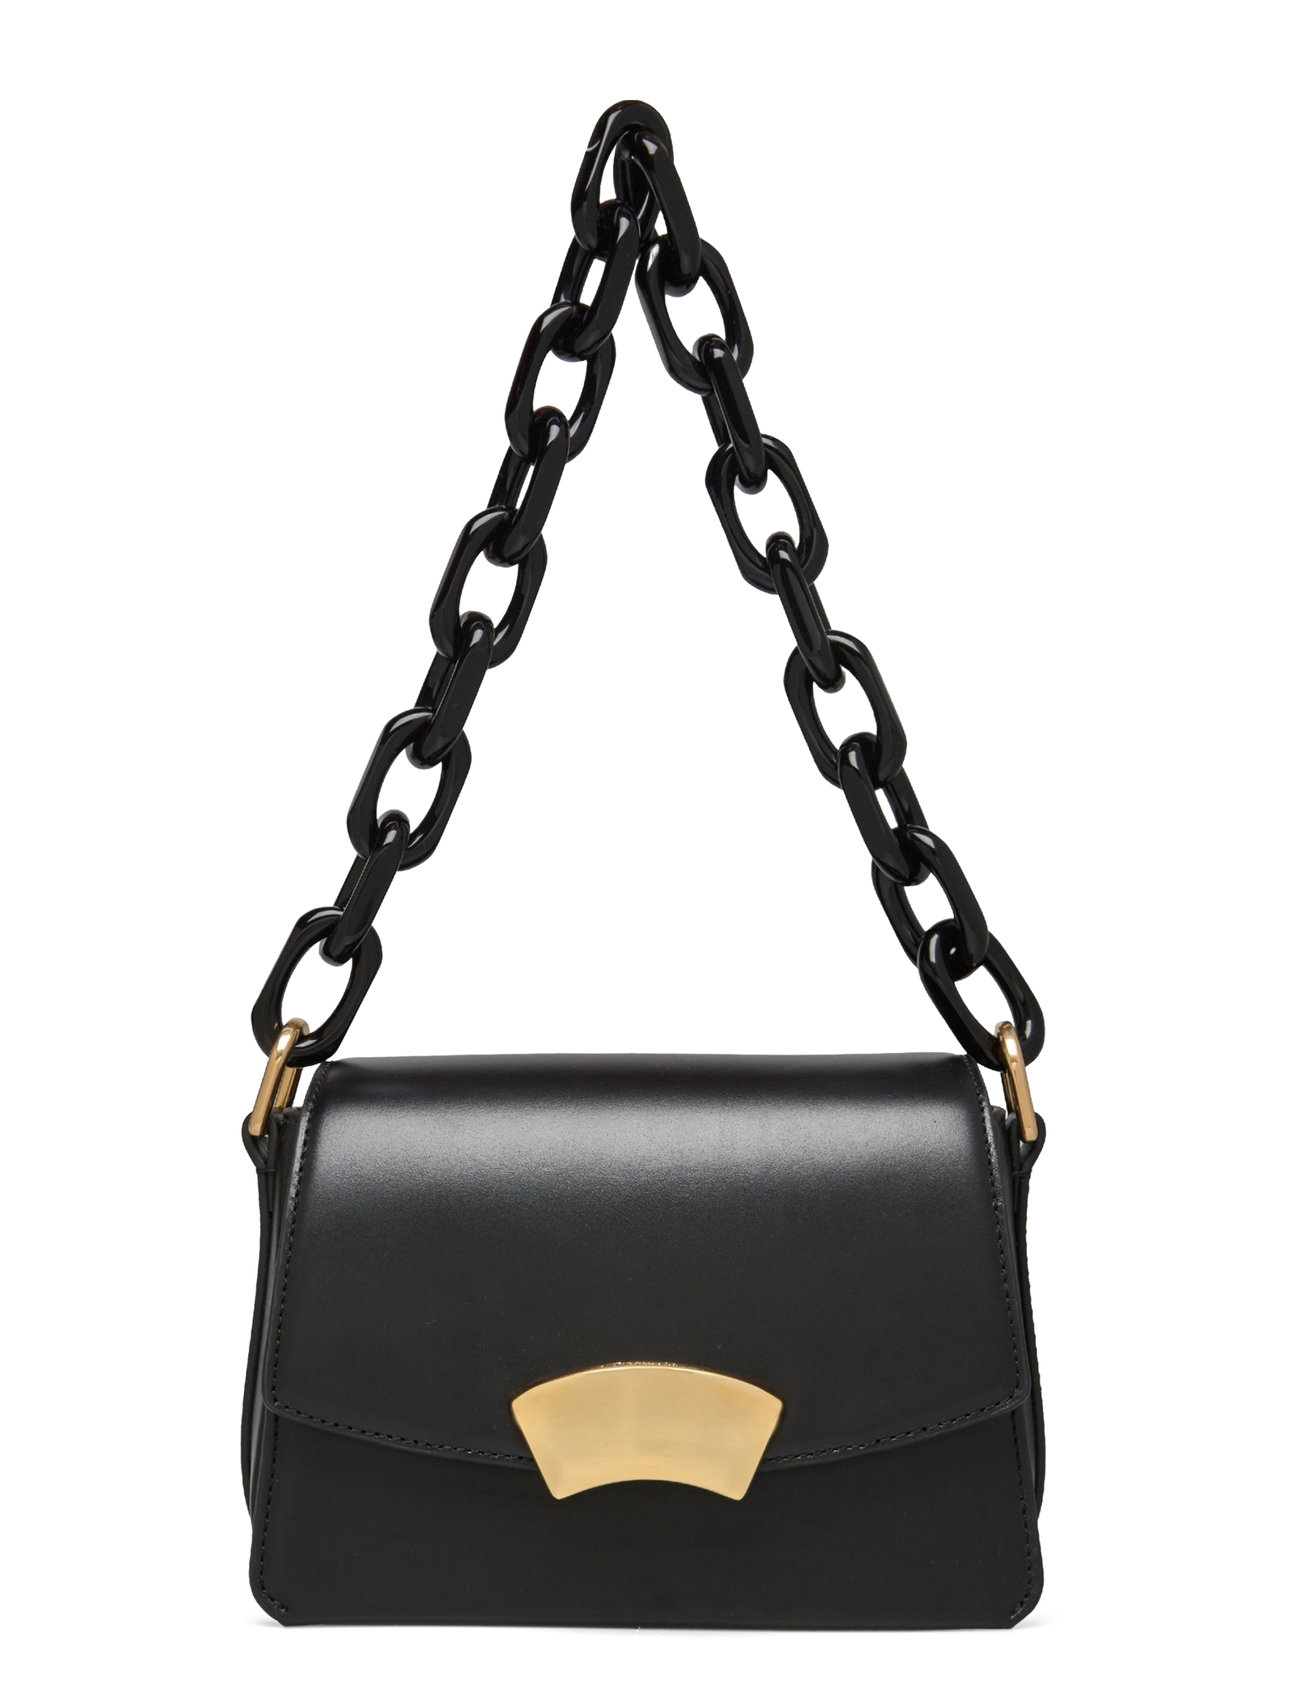 Id Shoulder Bag W Resin Chain Designers Top Handle Bags Black 3.1 Phillip Lim